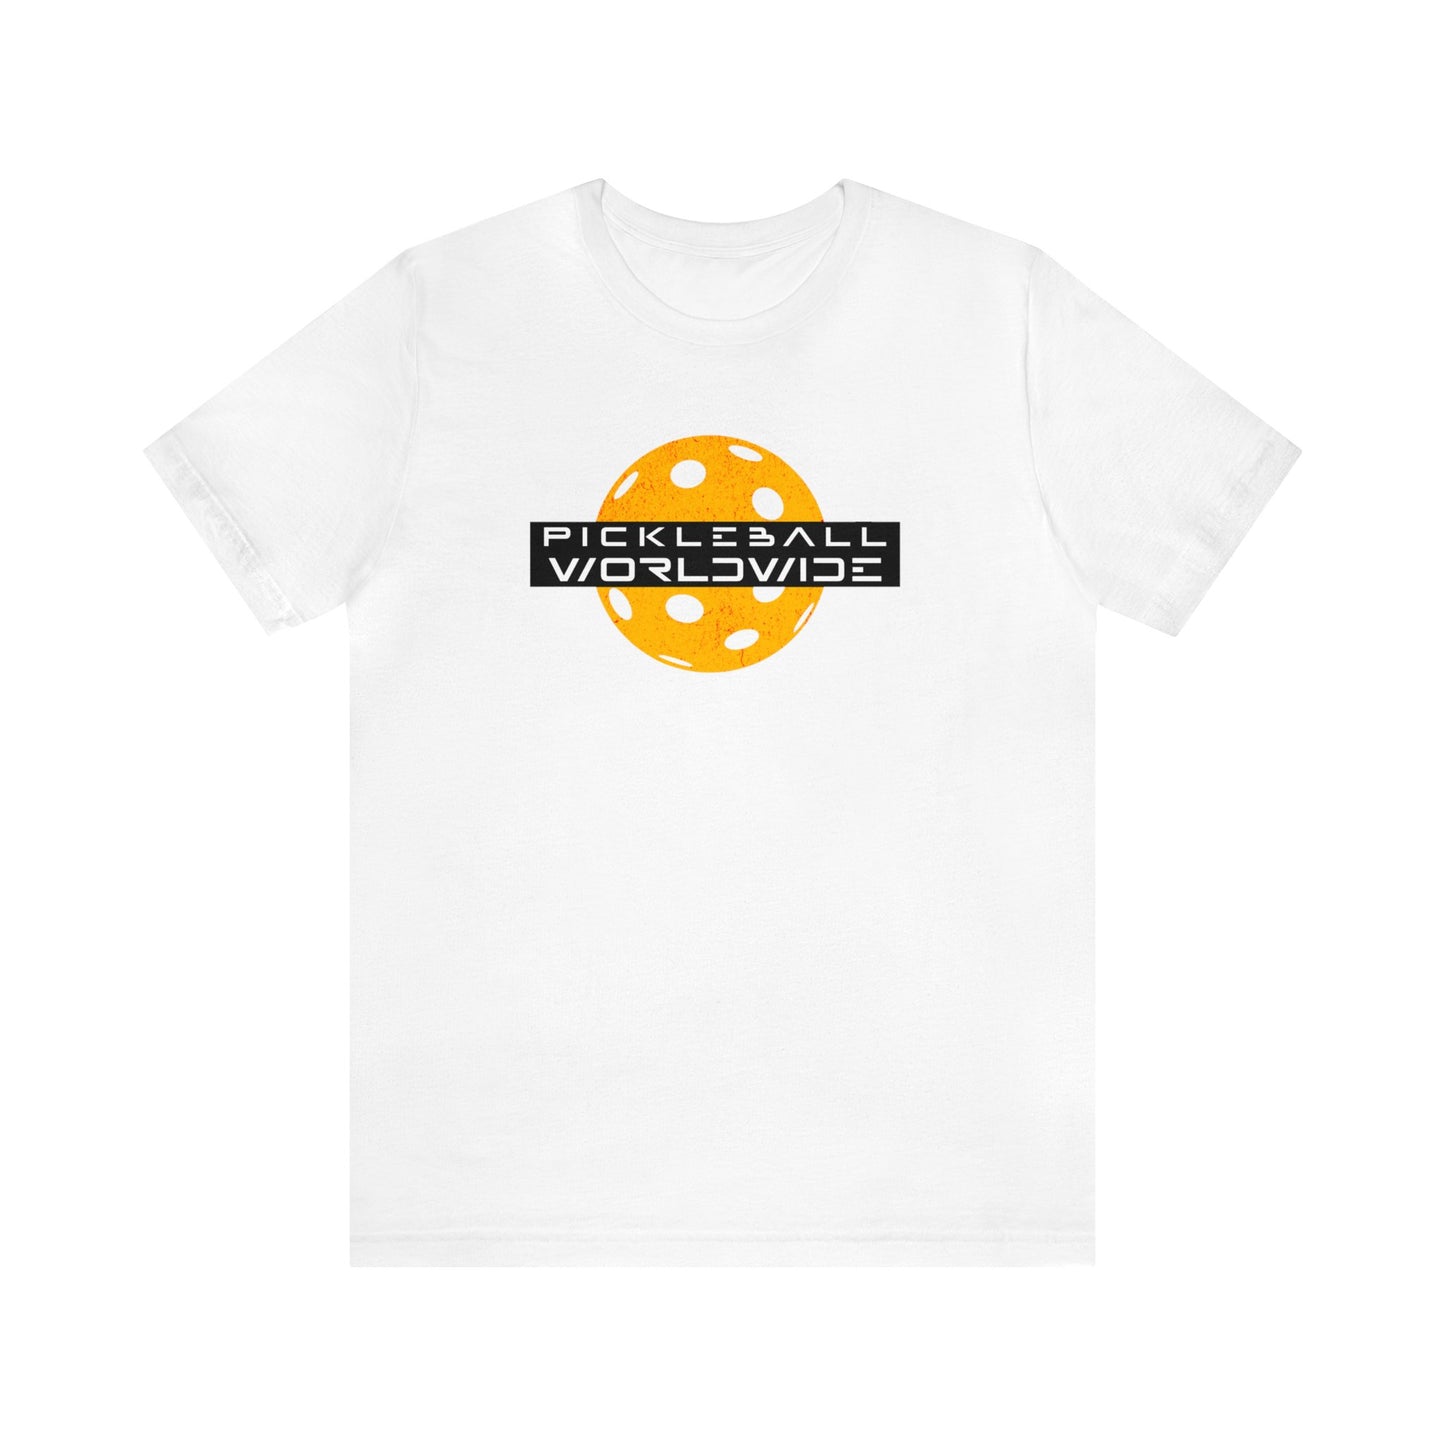 Pickleball Worldwide – The Global Player's Cotton Tshirt